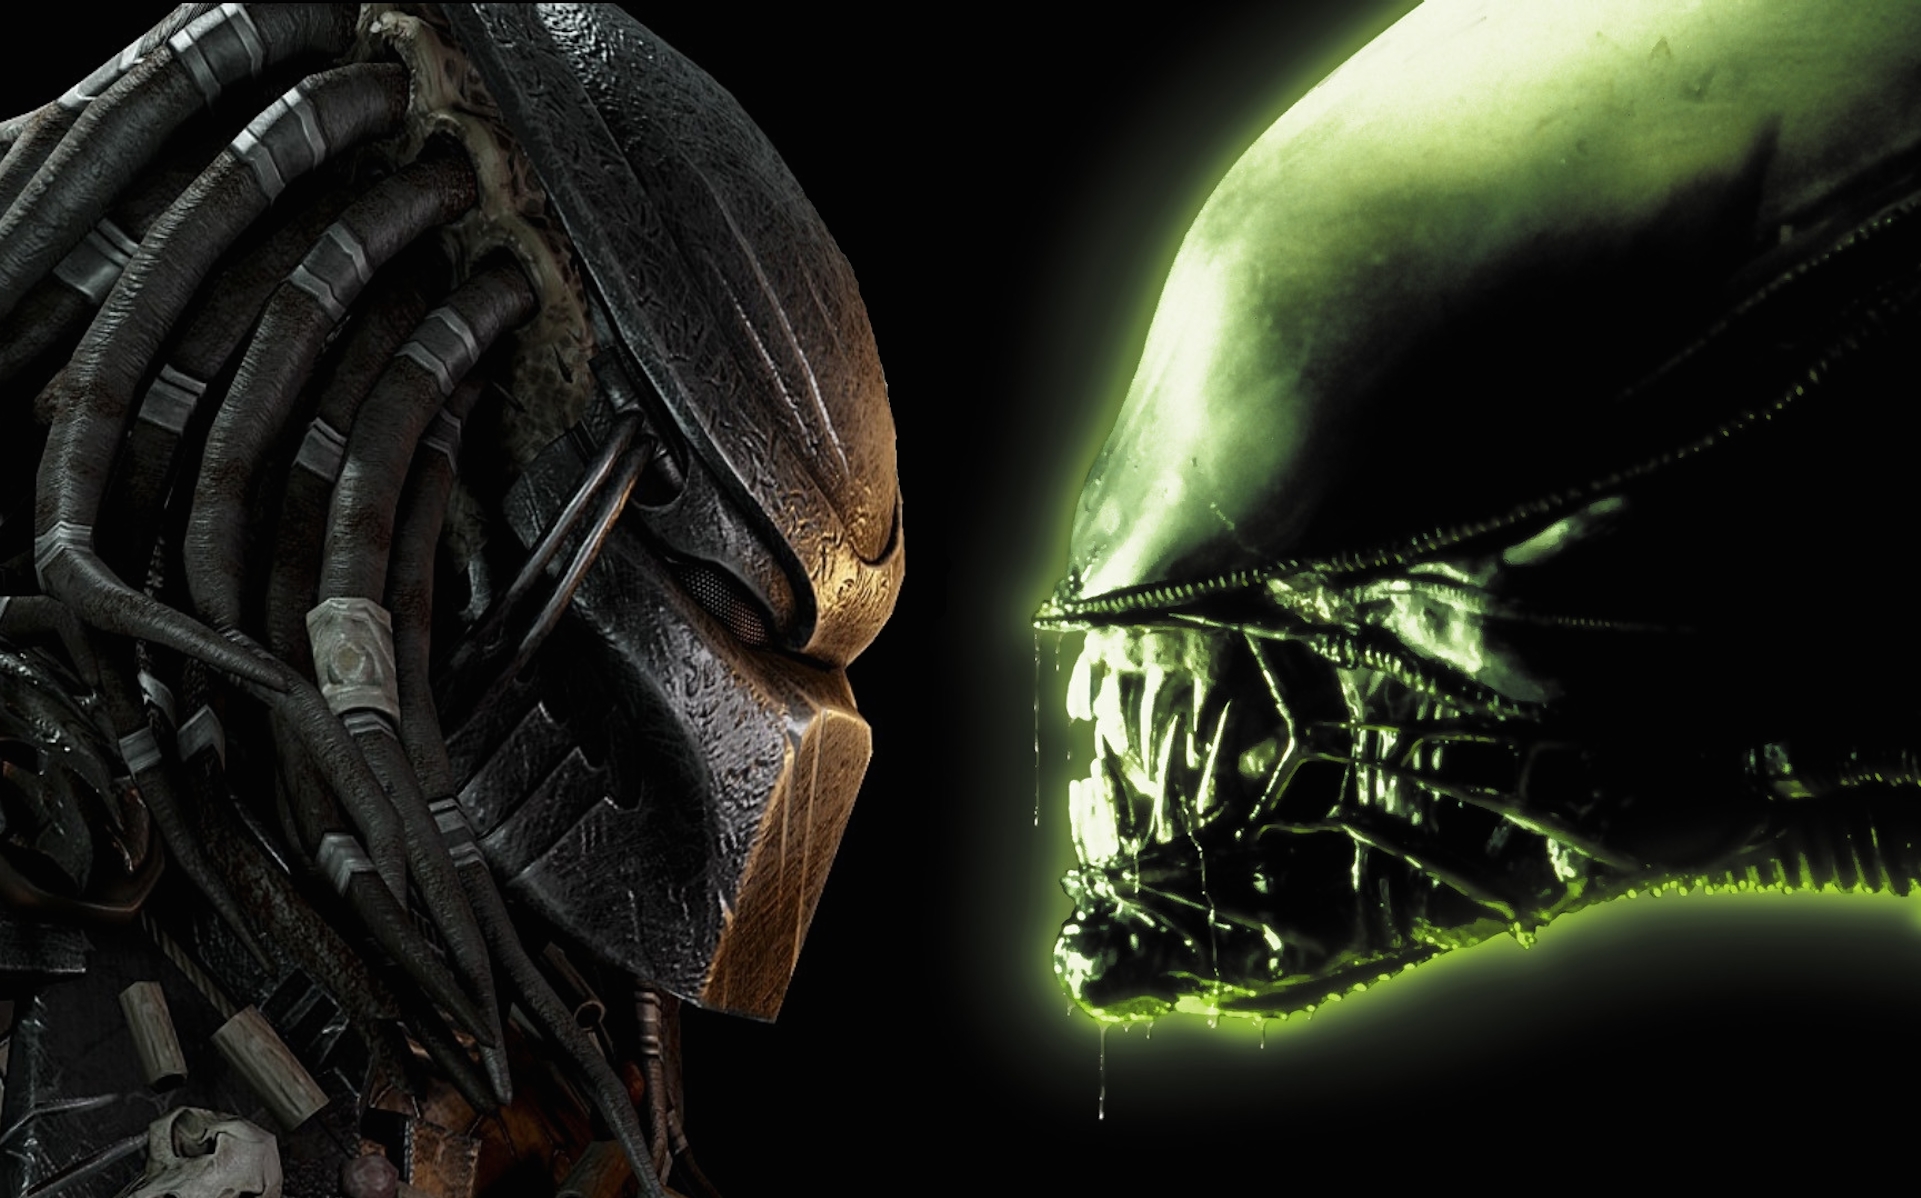 Alien Vs. Predator: Which Franchise Killed It In The Box Office